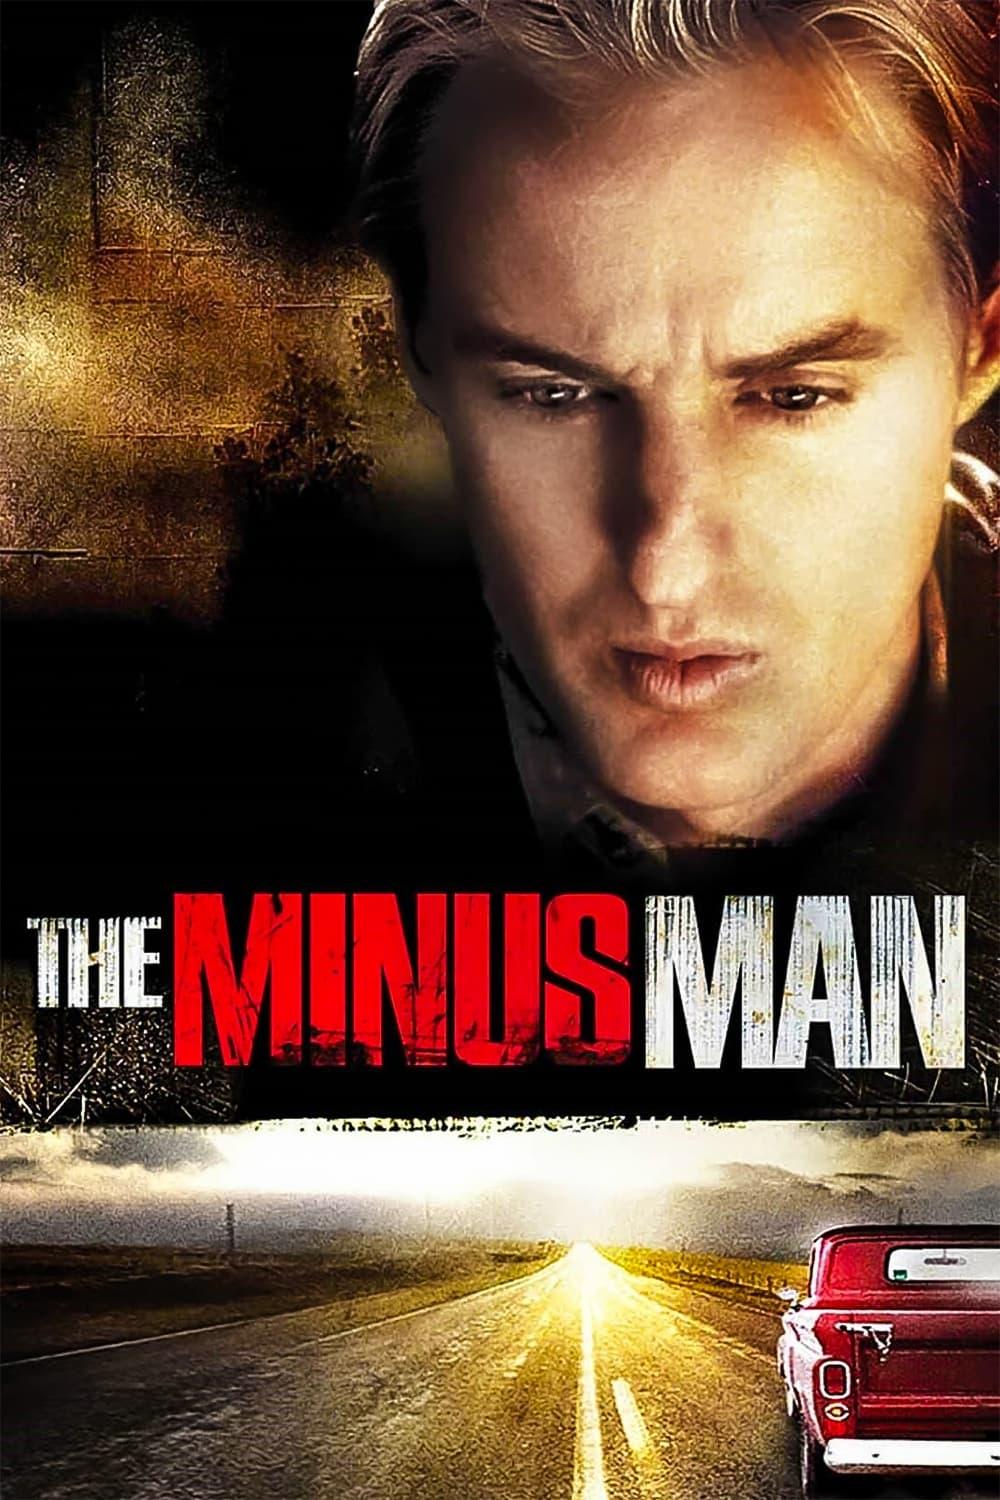 The Minus Man poster